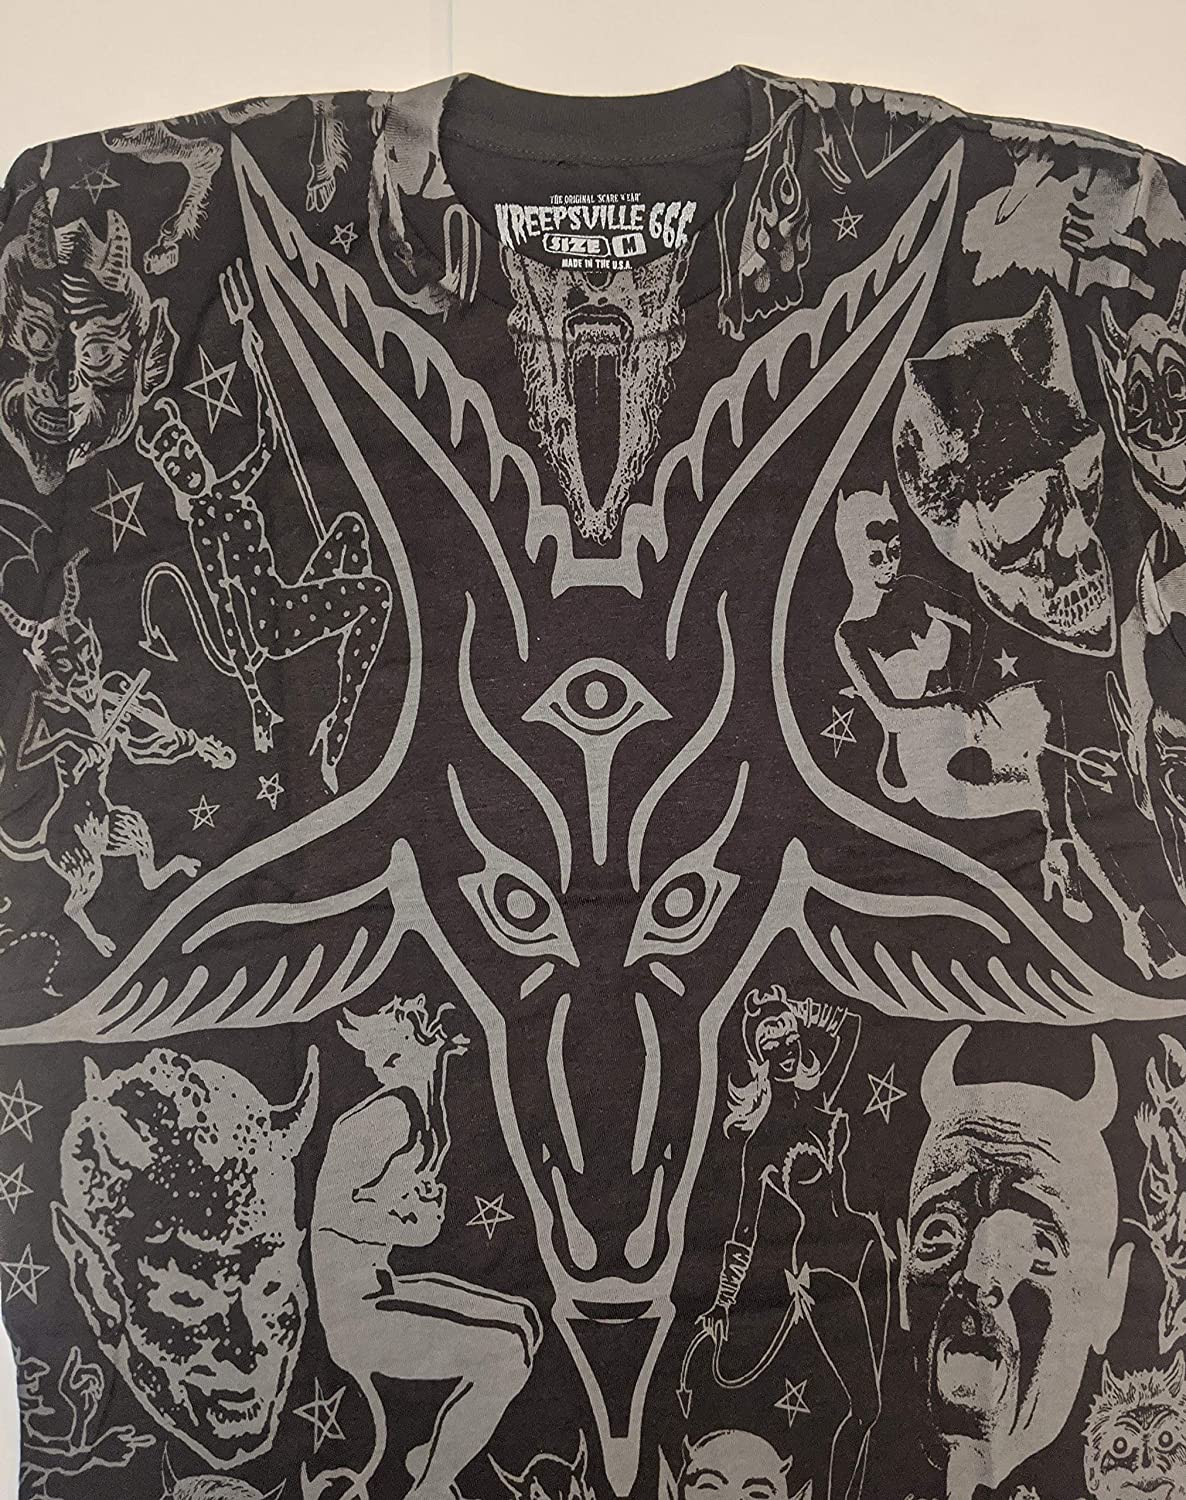 Baphomet Men’s T-Shirt Goat Head Devil Satanic Goth Punk Pentagram Tee